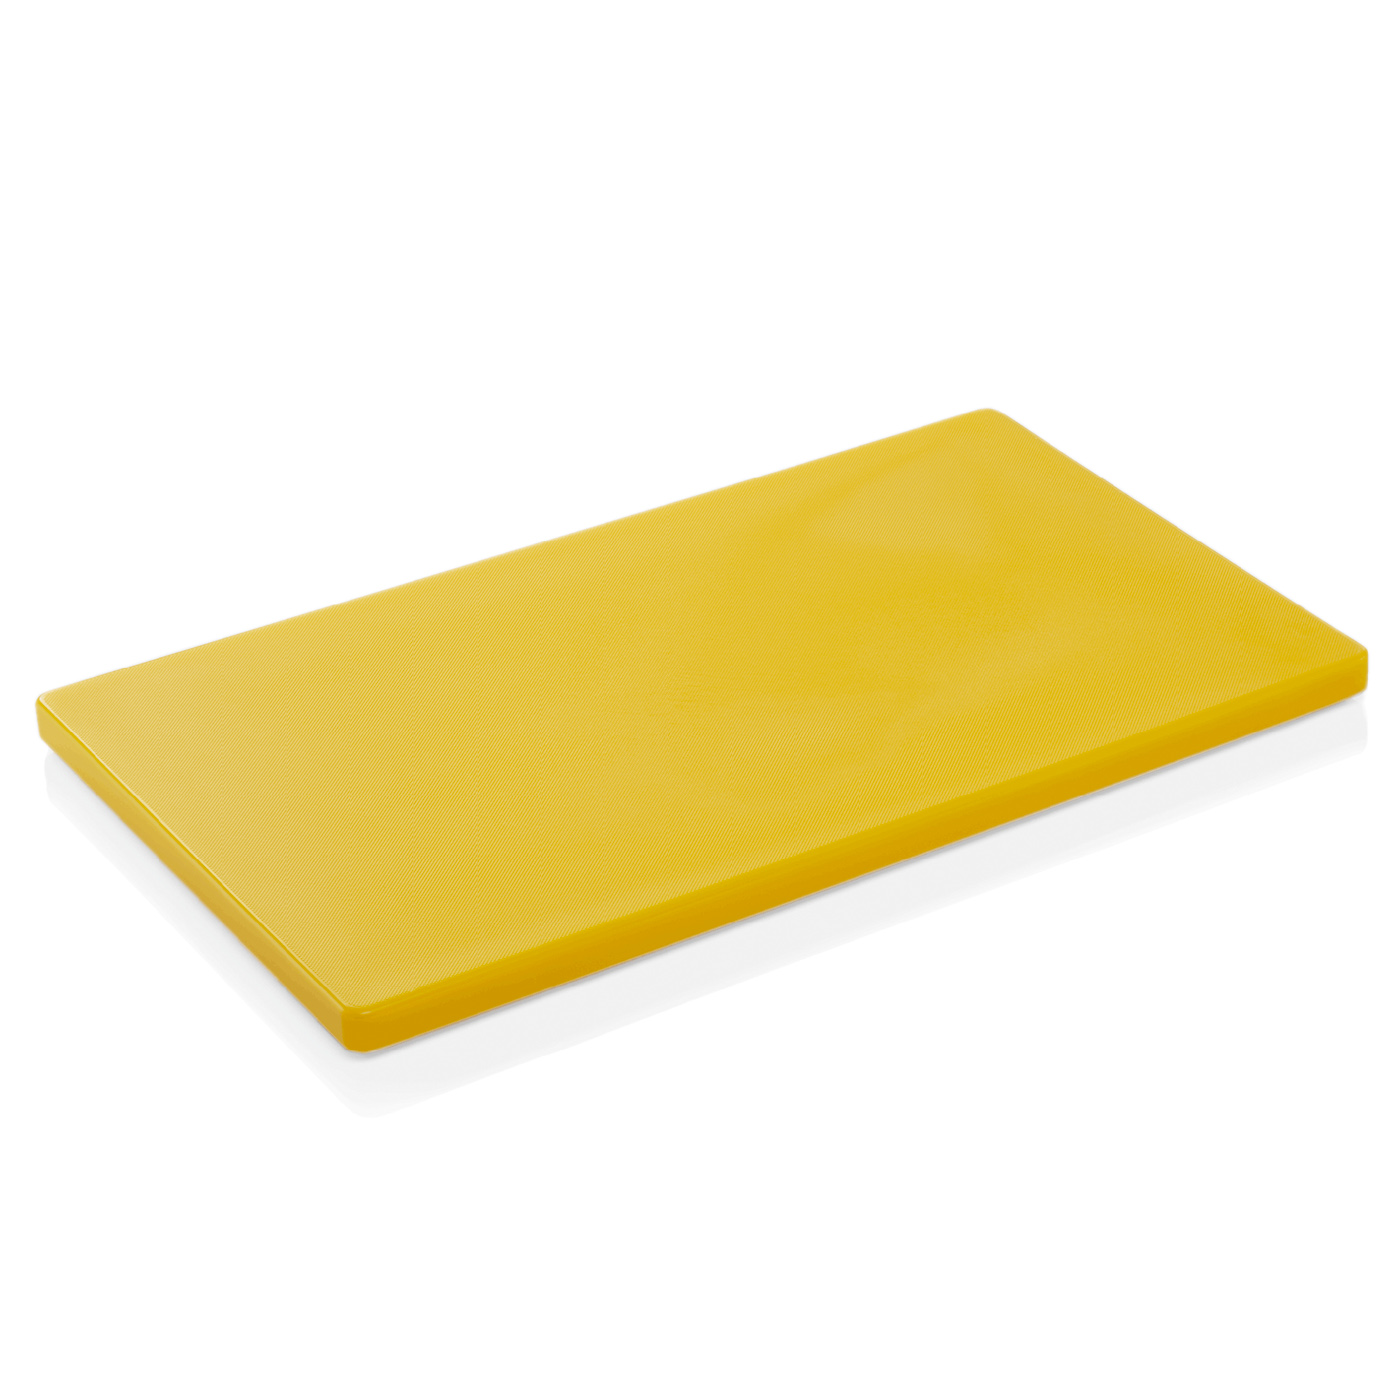 HACCP Schneidbrett, Material: Polyethylen. Farbe: gelb.